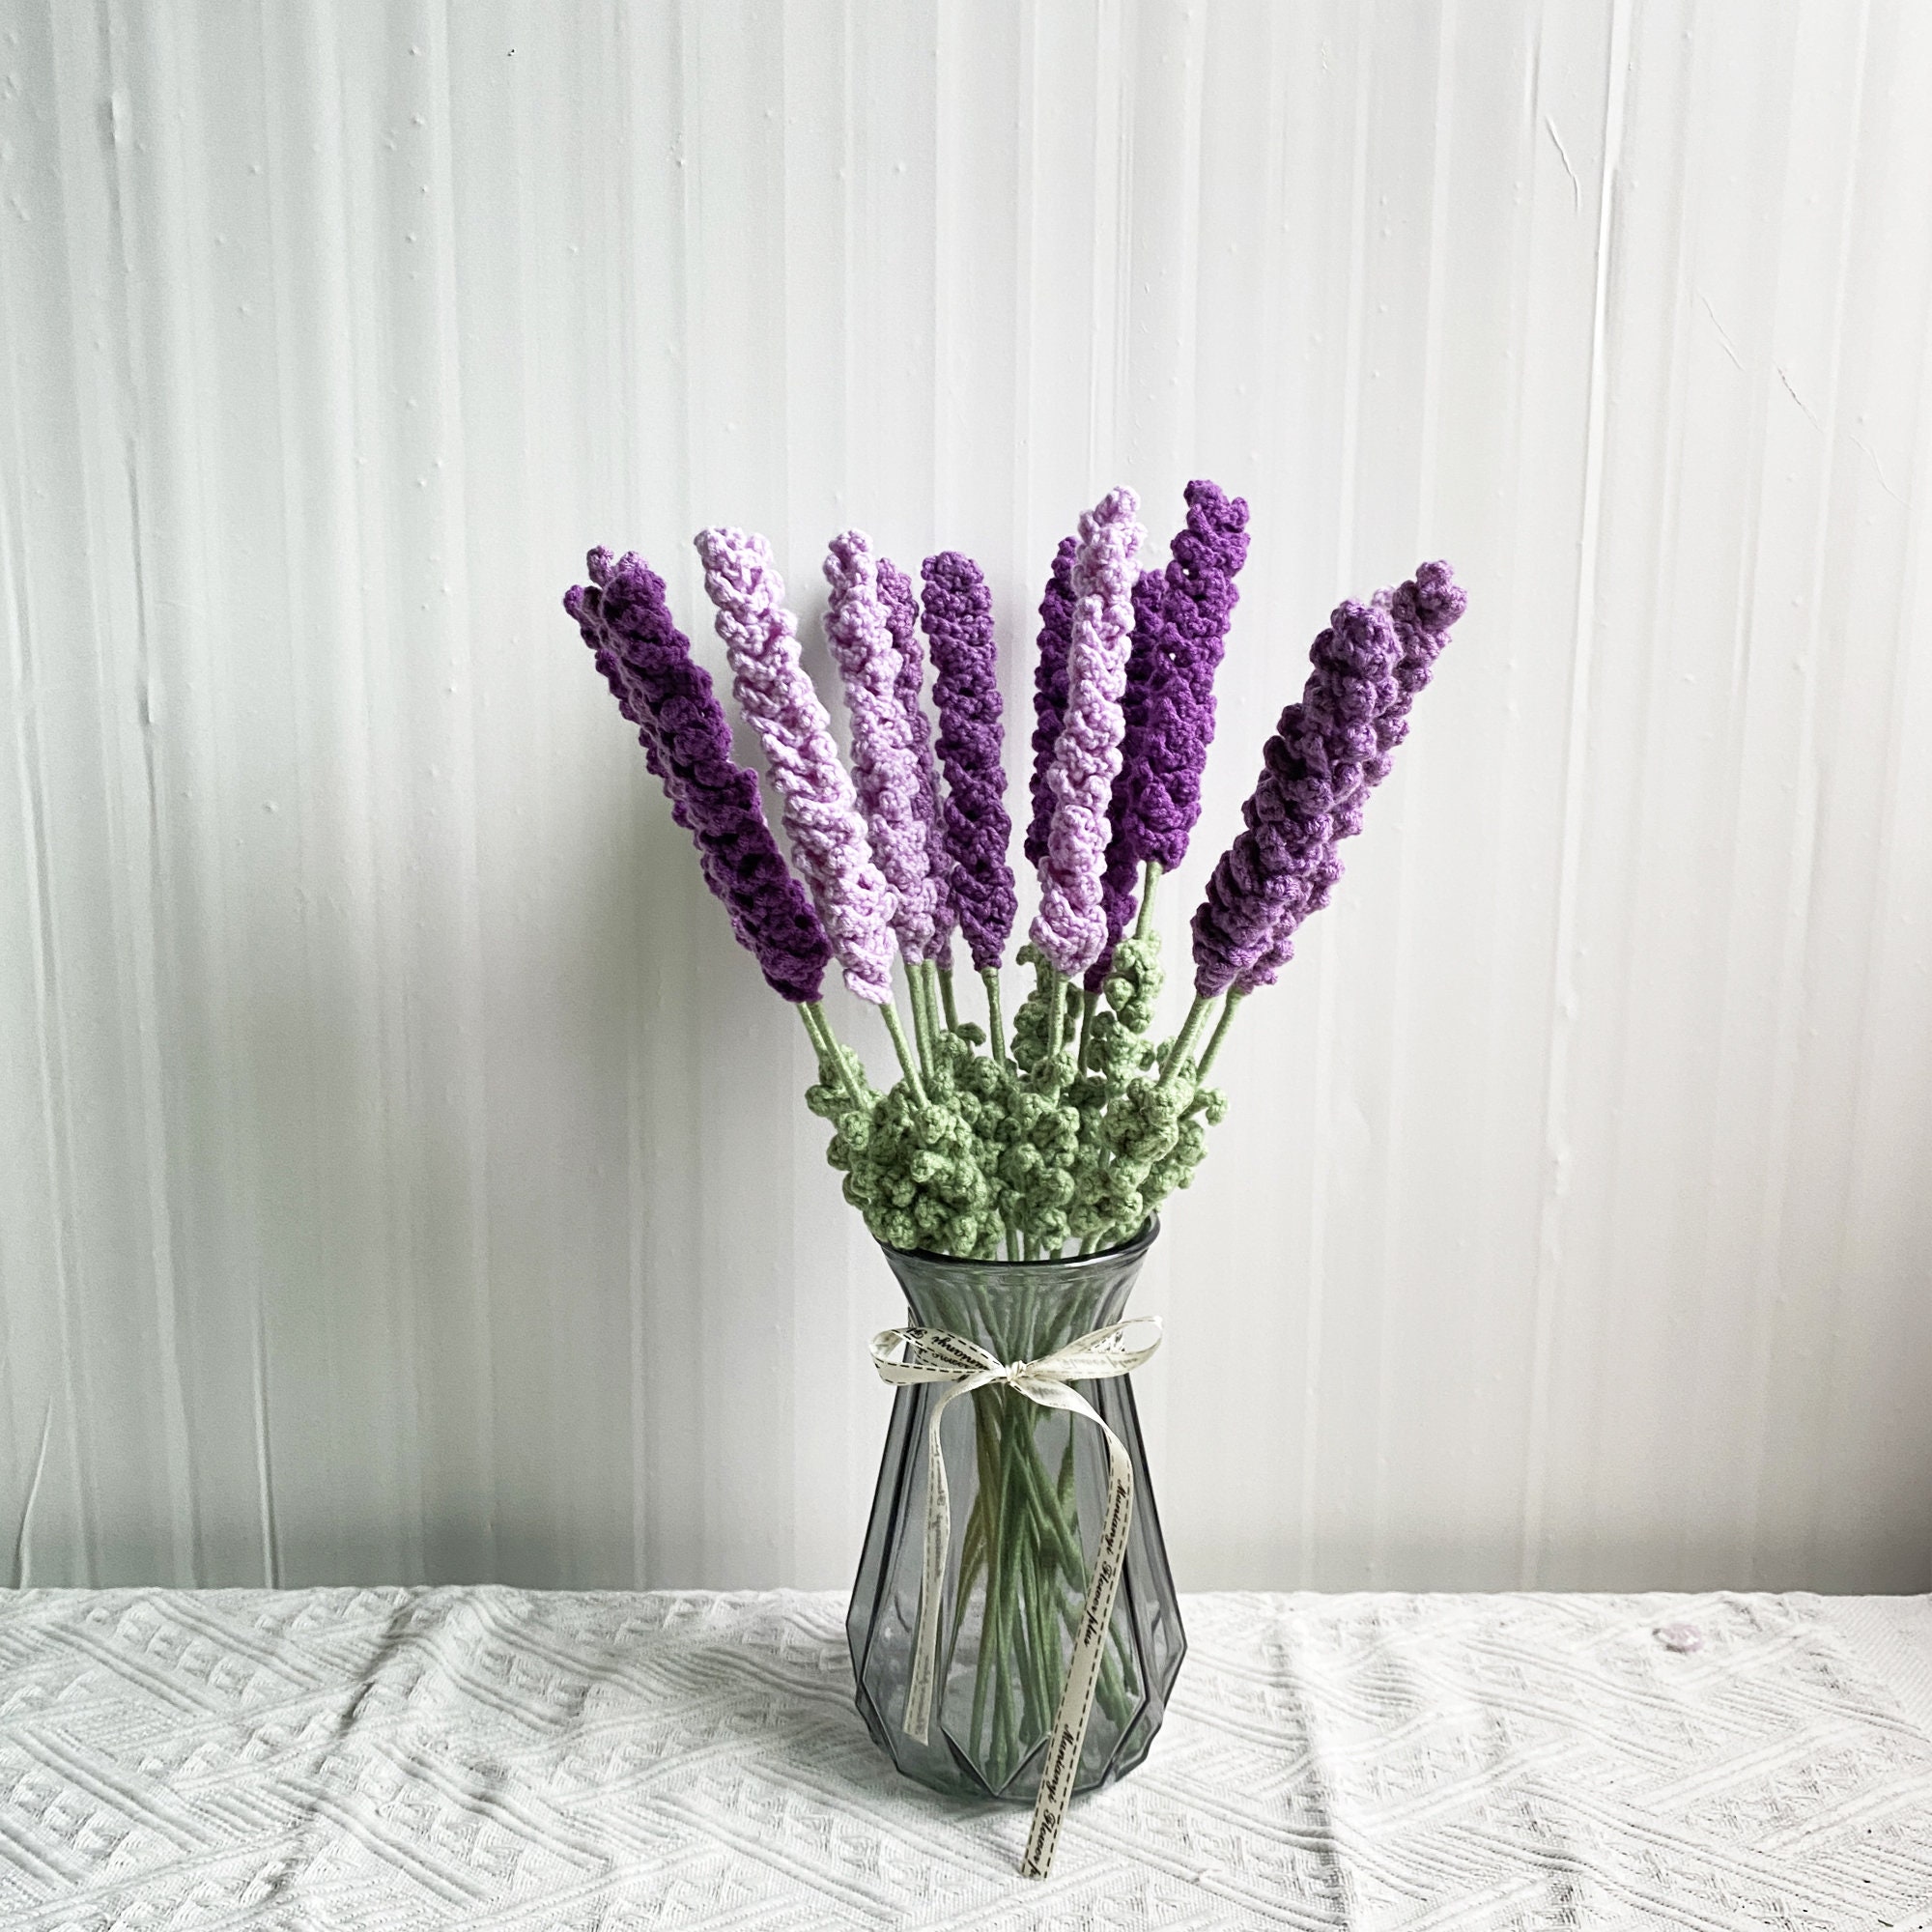 Dried Lavender Bundles, Total 250 Stems 100% Natural Lavender Flowers for DIY Flower Arrangements Home Party Wedding Decor